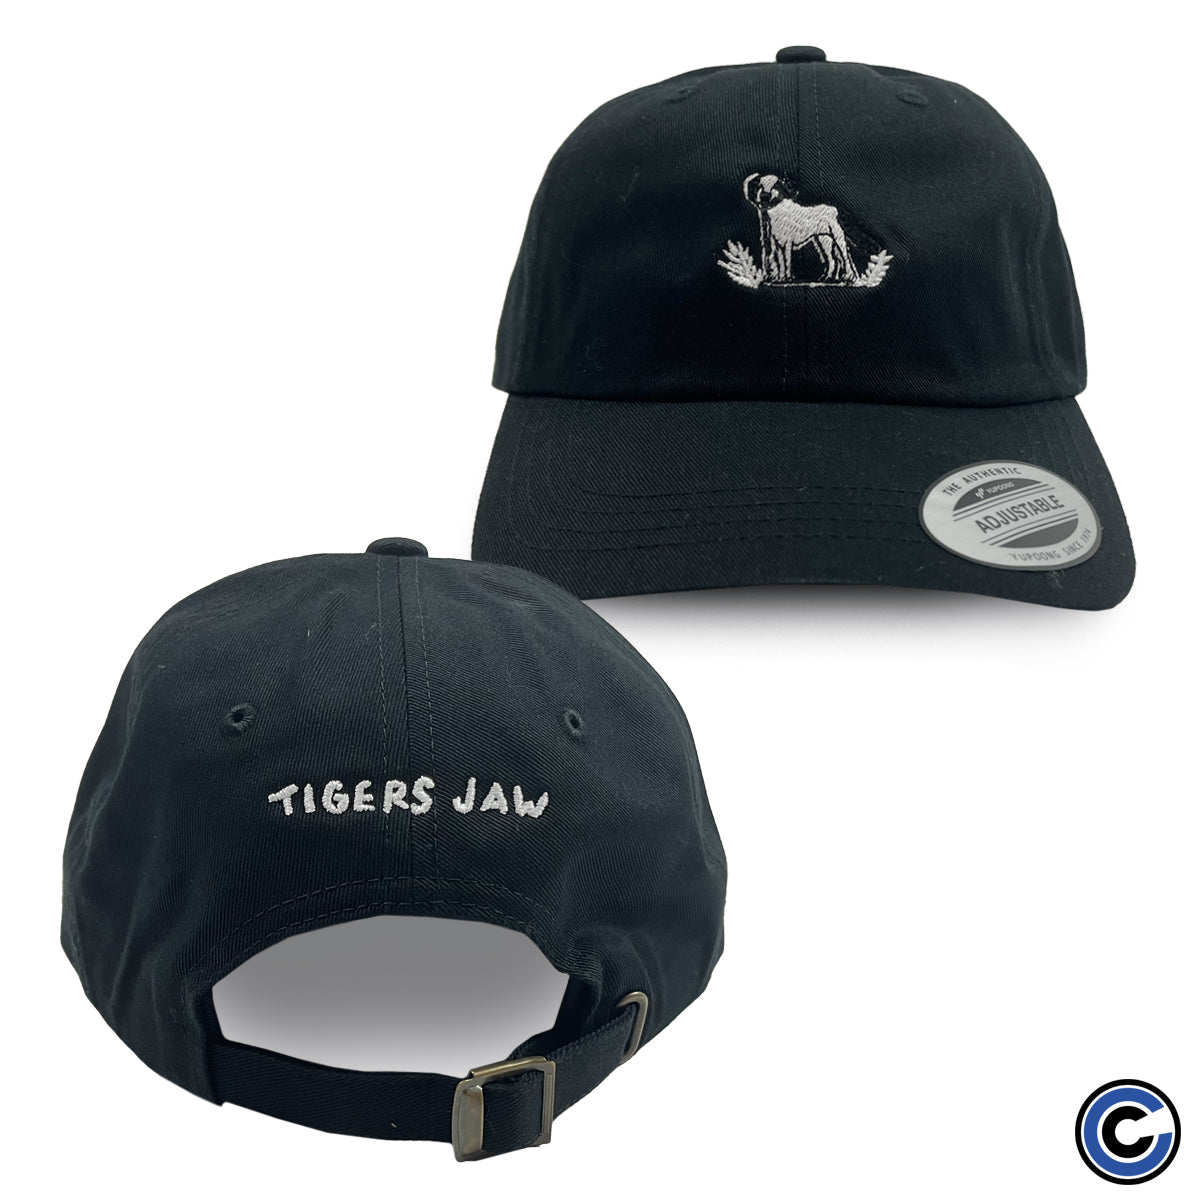 Tigers Jaw "Dog" Hat